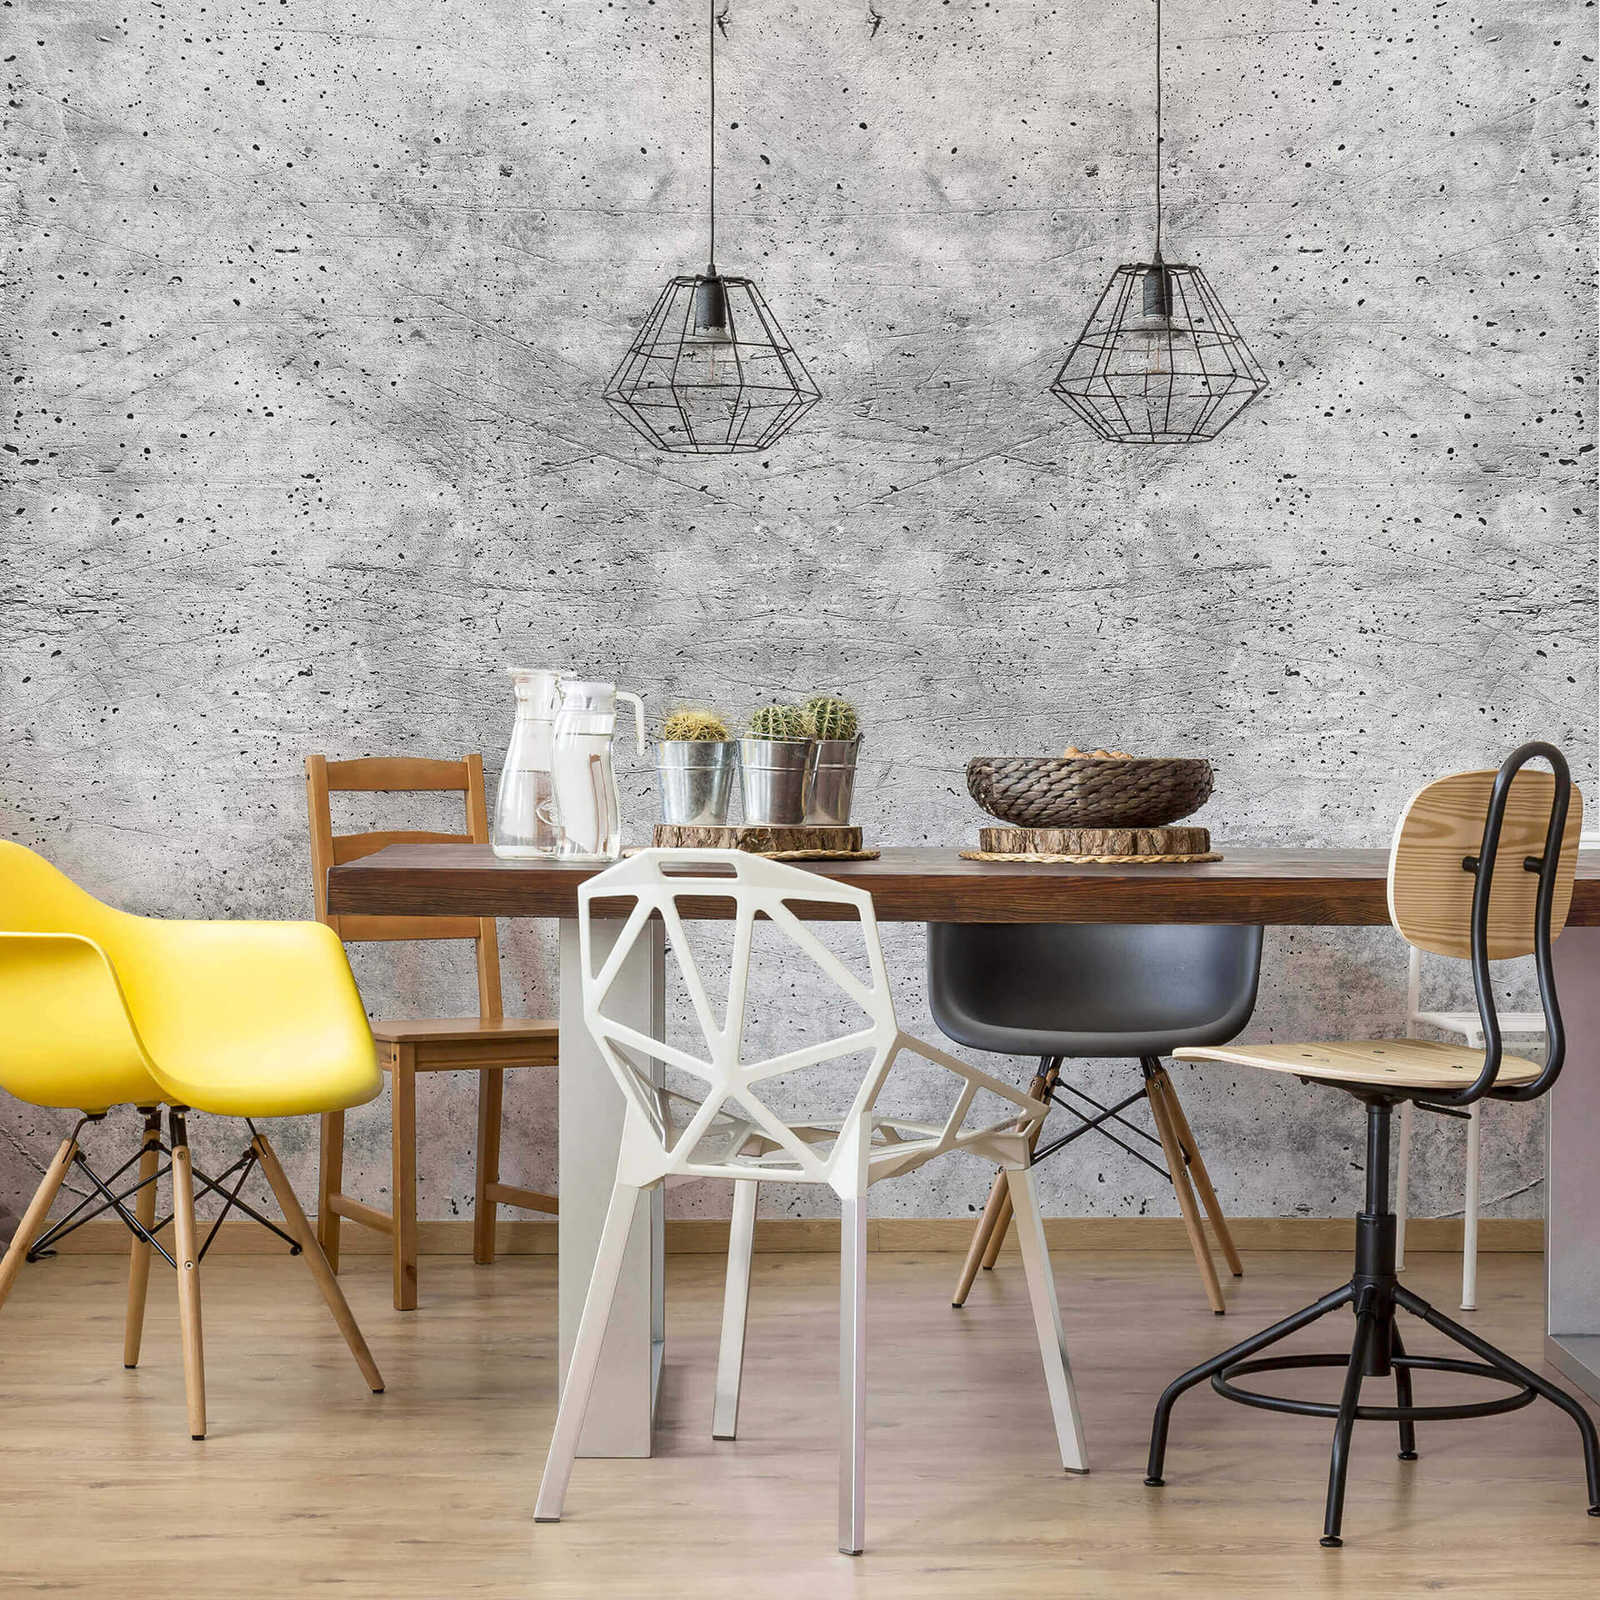             Concrete optics photo wallpaper with structure design - grey
        